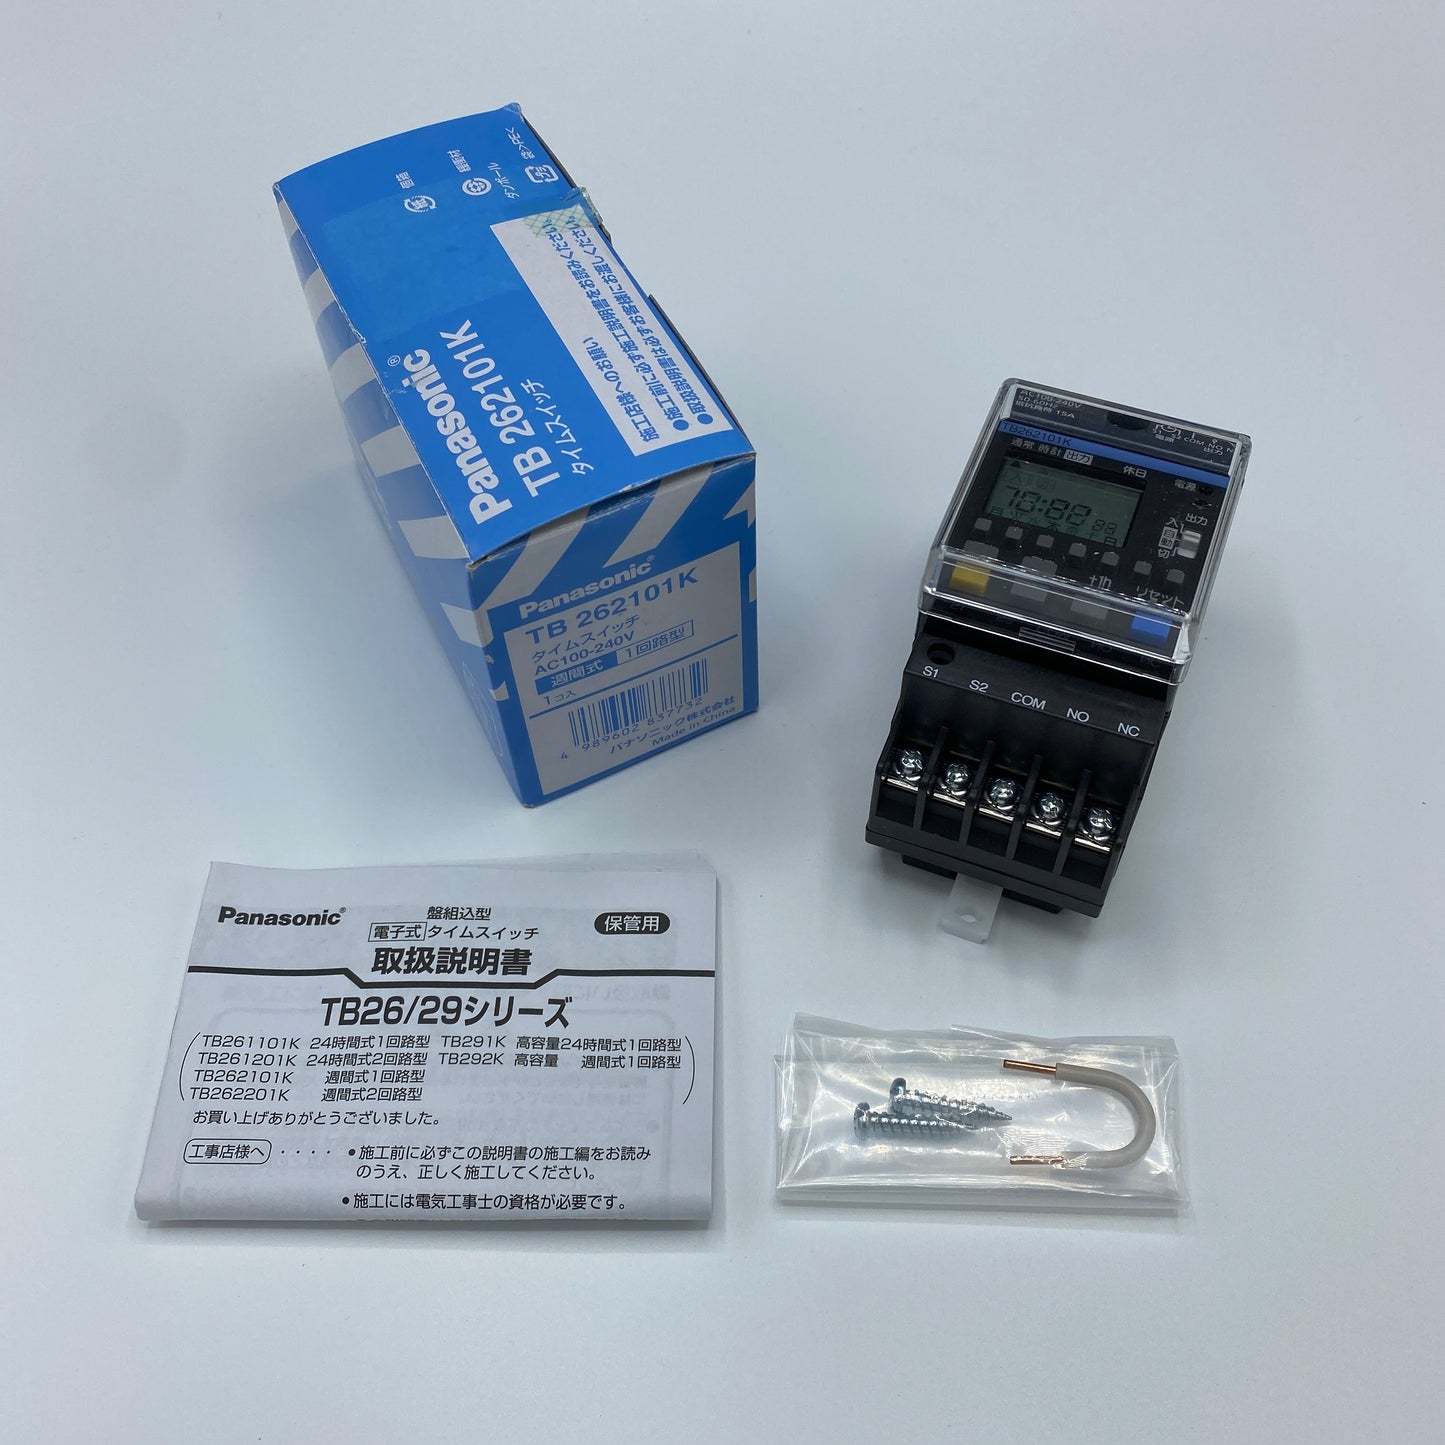 Panasonic TB 262101K 協約型タイムスイッチ(1回路型) | 八雲機械工具